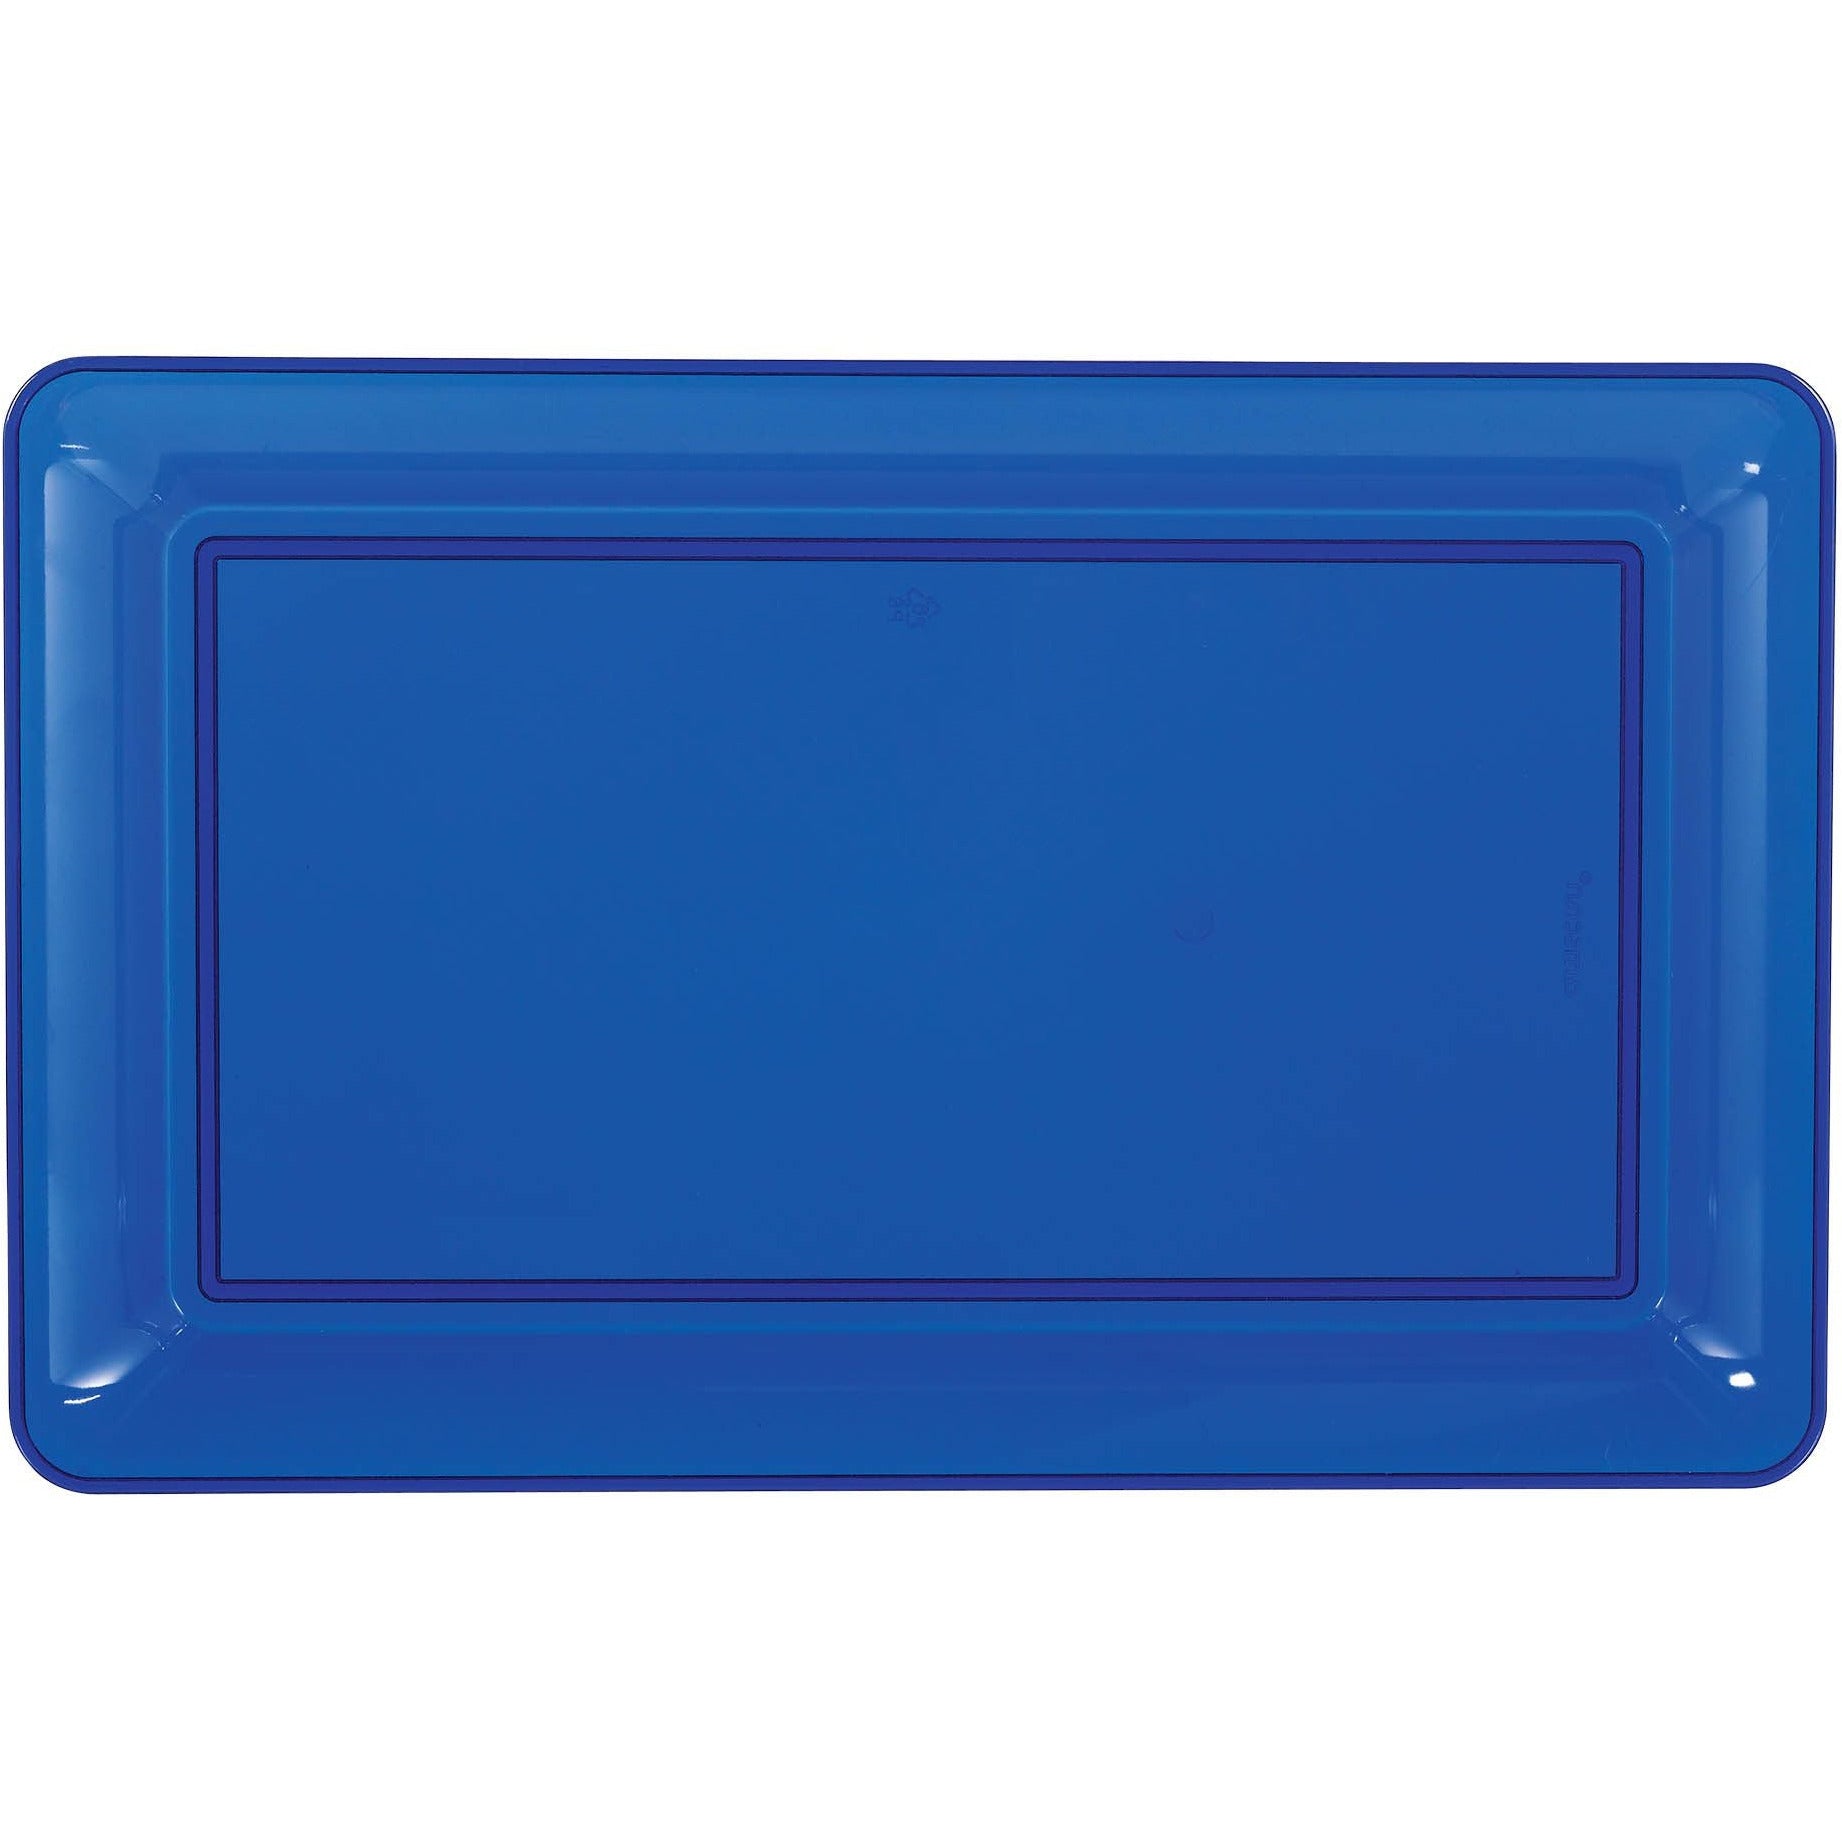 Amscan BASIC 11" x 18" Bright Royal Blue Tray